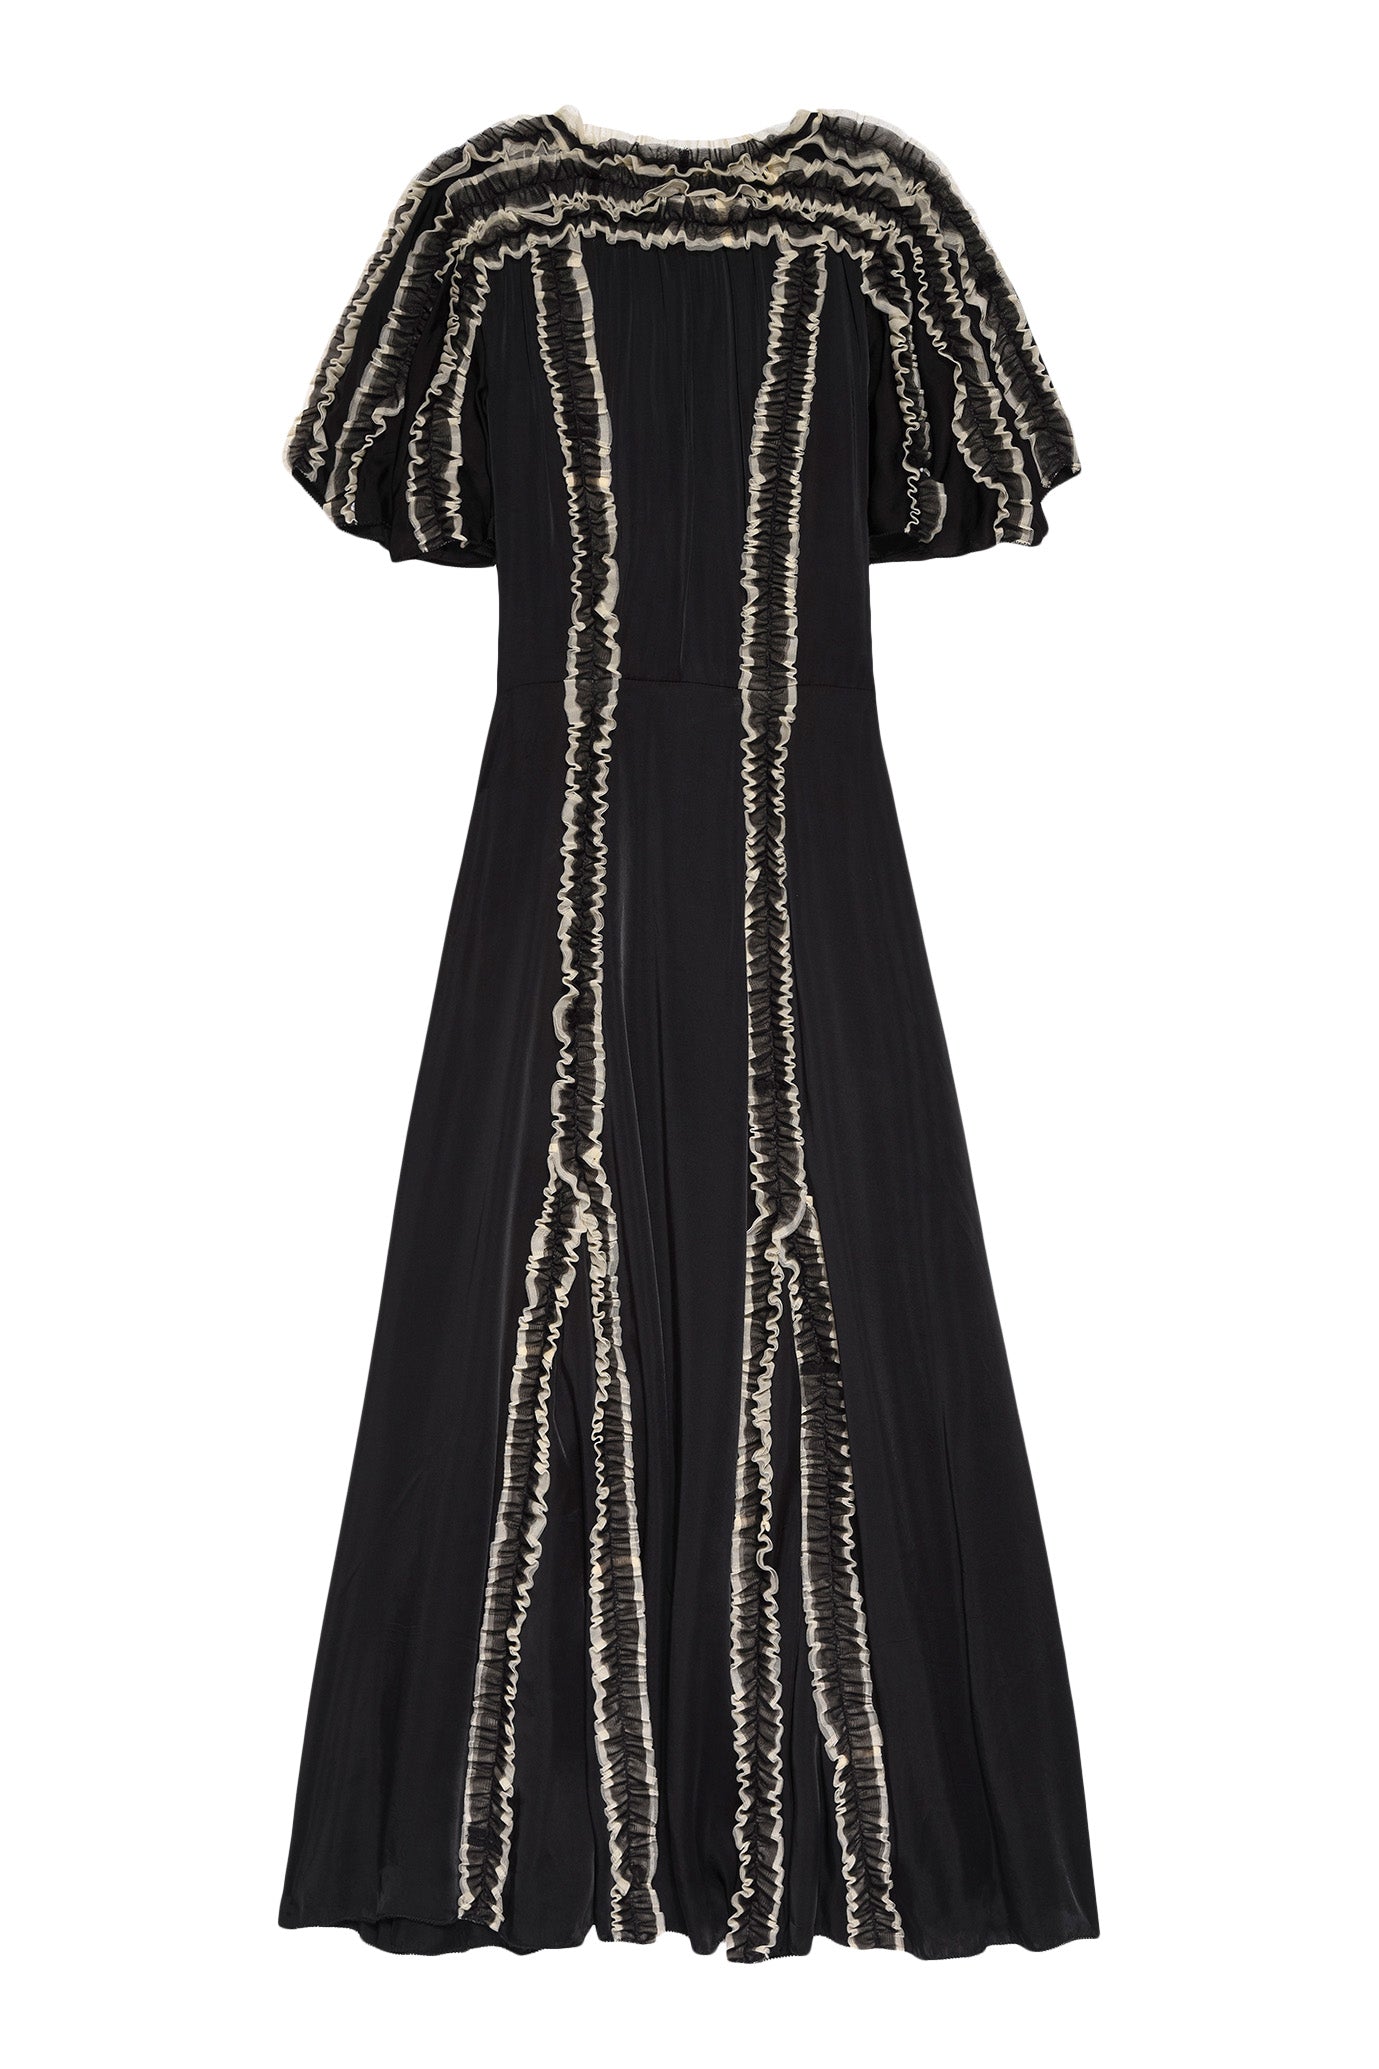 The Great Dancehall Dress in Black Cream